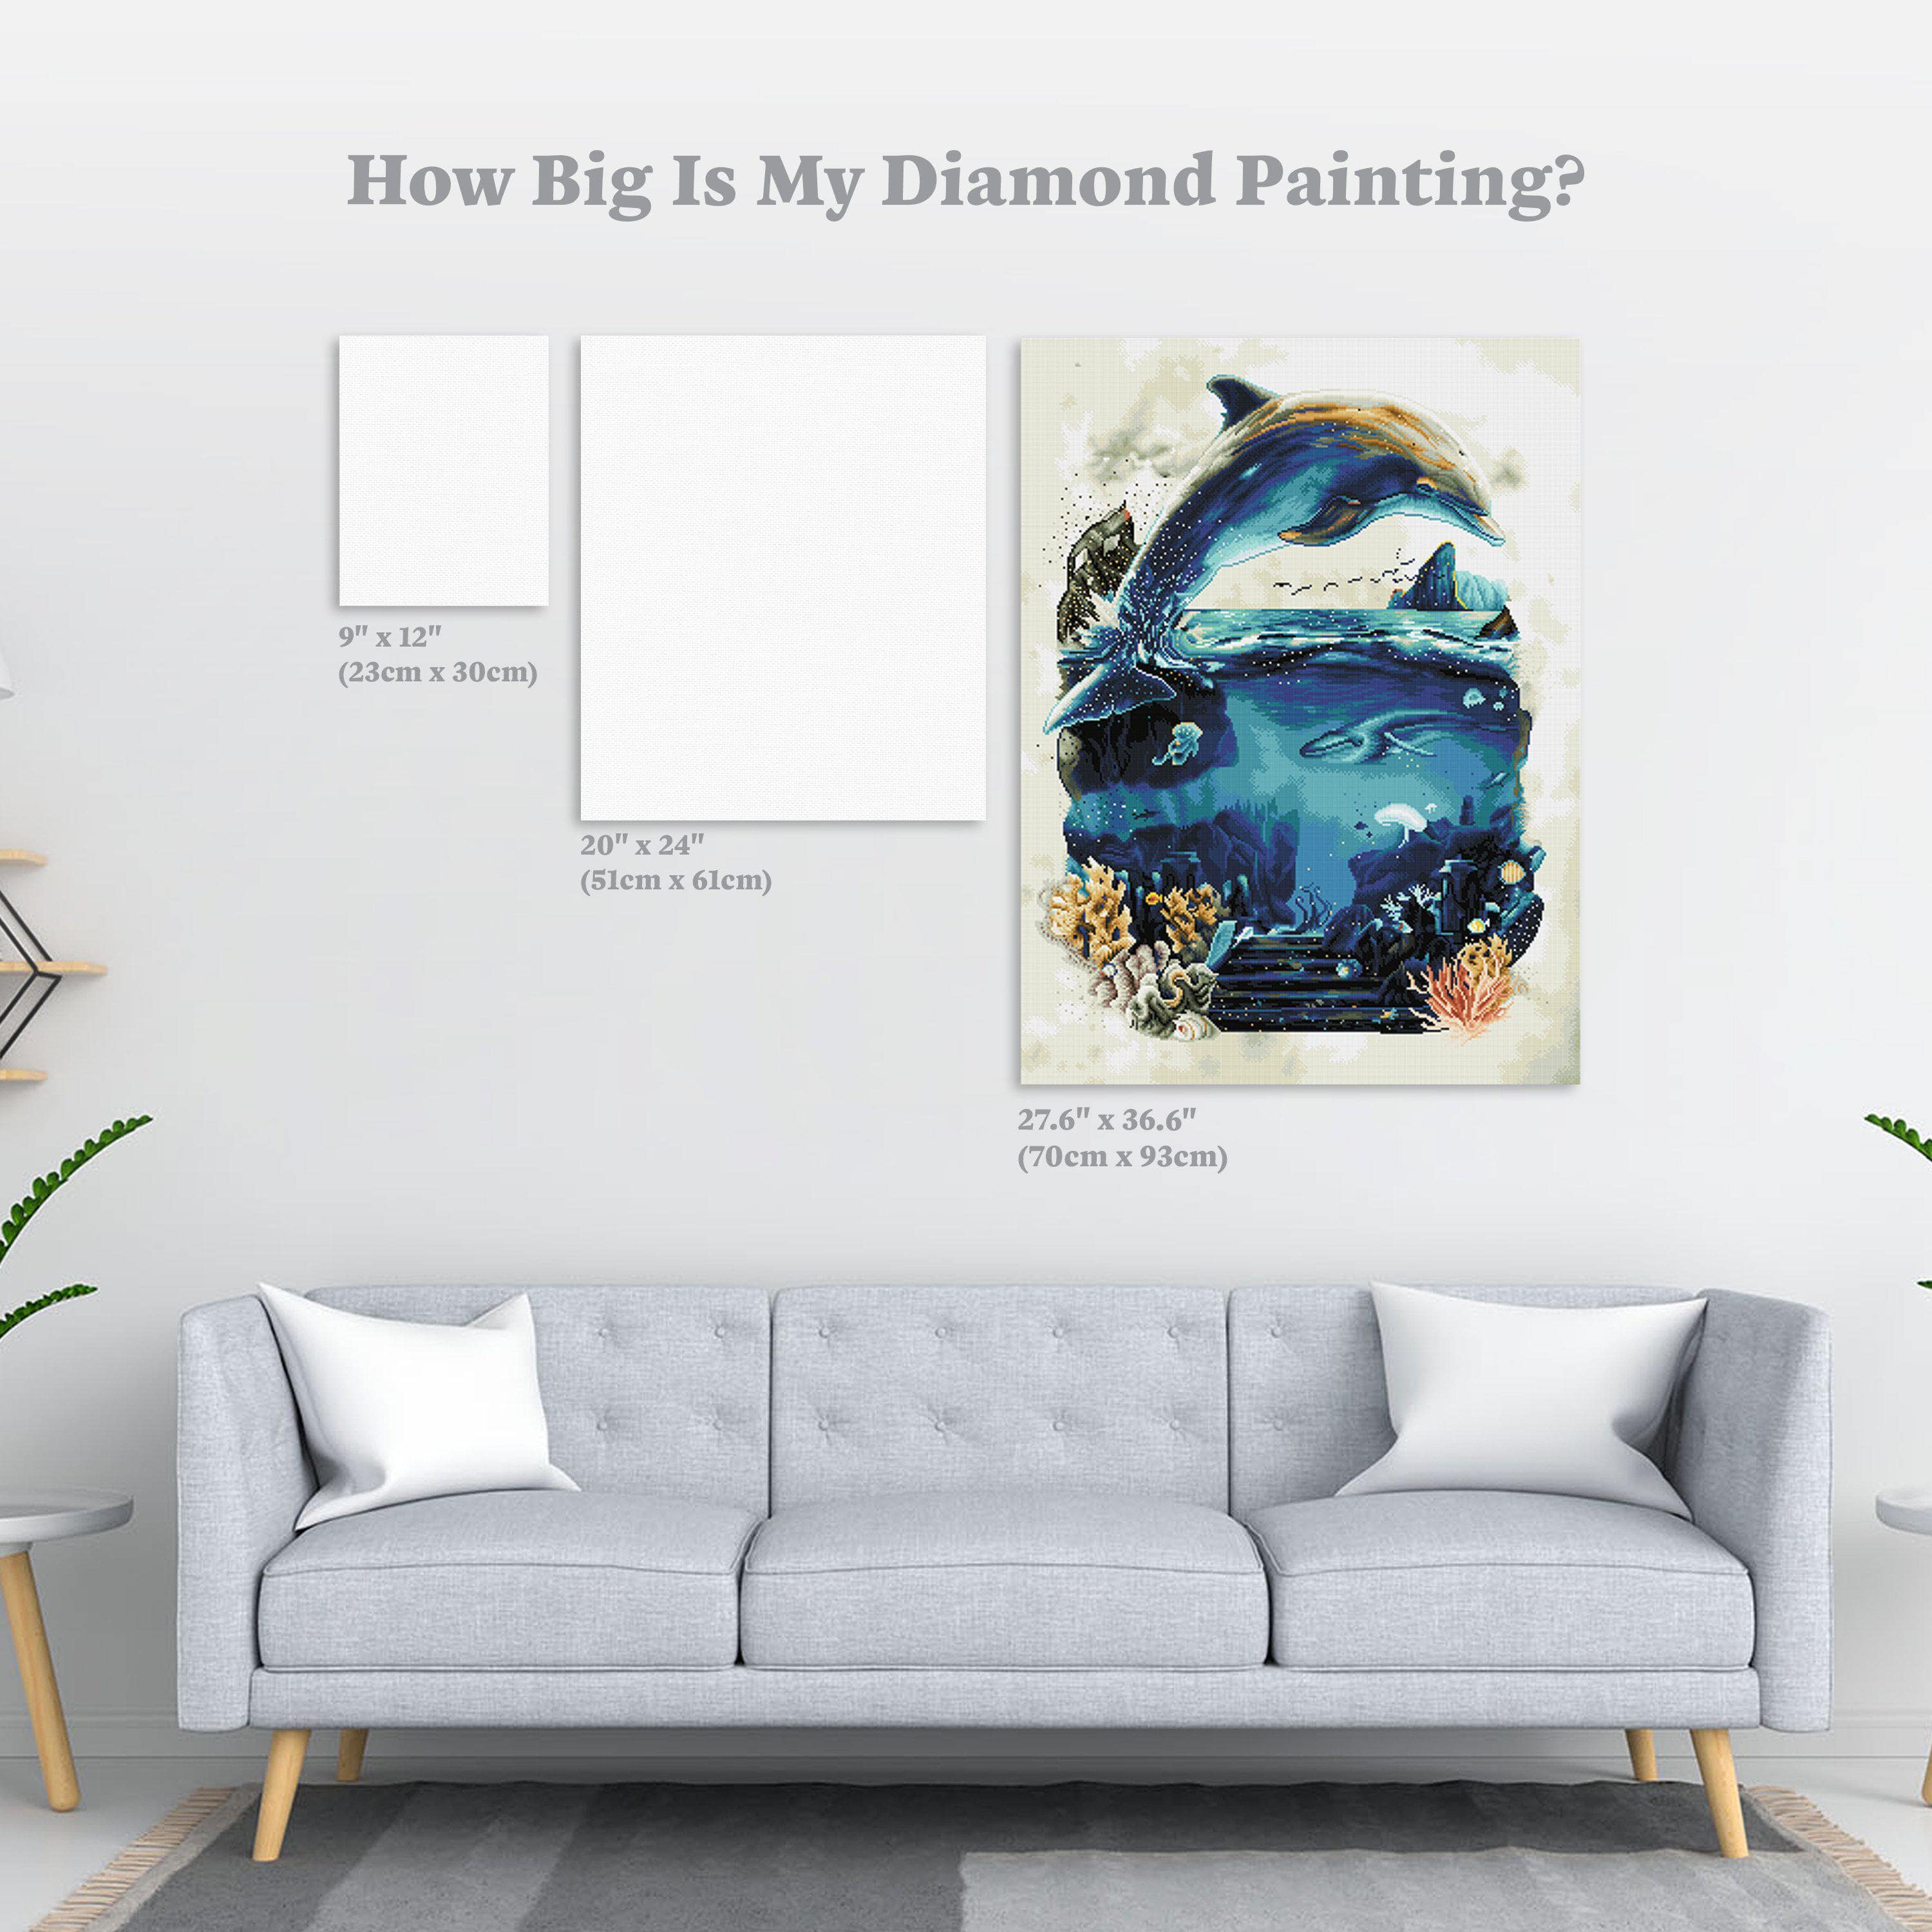 Stormy Ocean Diamond Painting Kit with Free Shipping – 5D Diamond Paintings